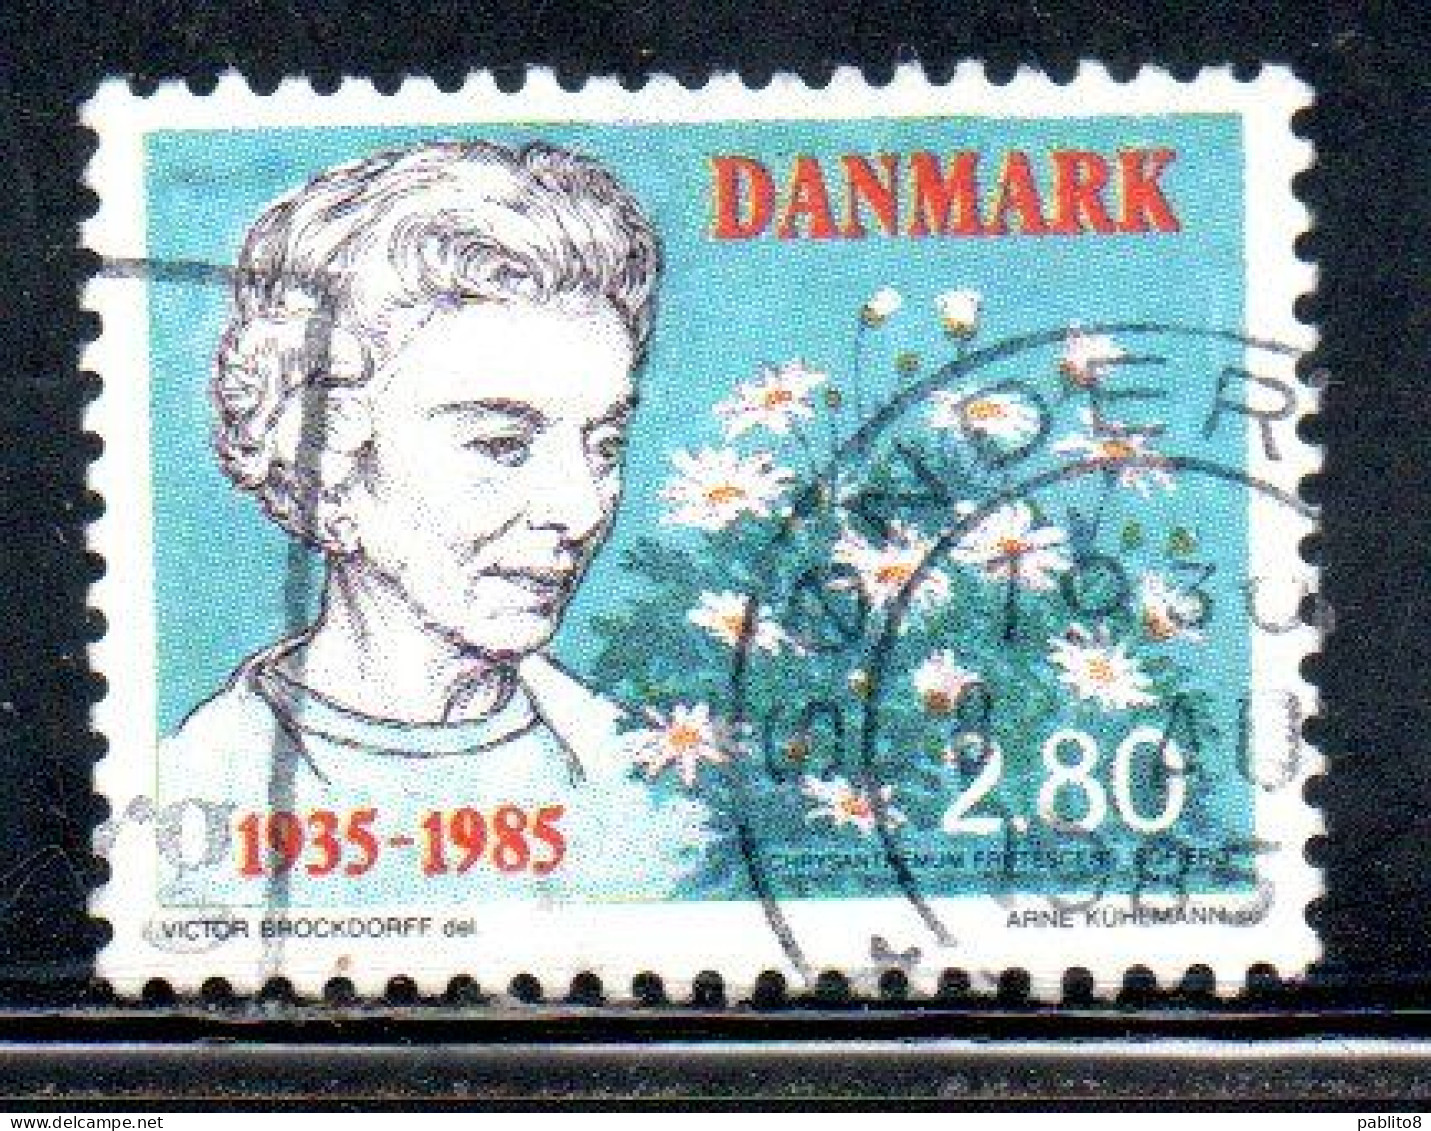 DANEMARK DANMARK DENMARK DANIMARCA 1985 ARRIVAL OF QUEEN INGRID 50th ANNIVERSAY 2.80k USED USATO OBLITERE' - Used Stamps